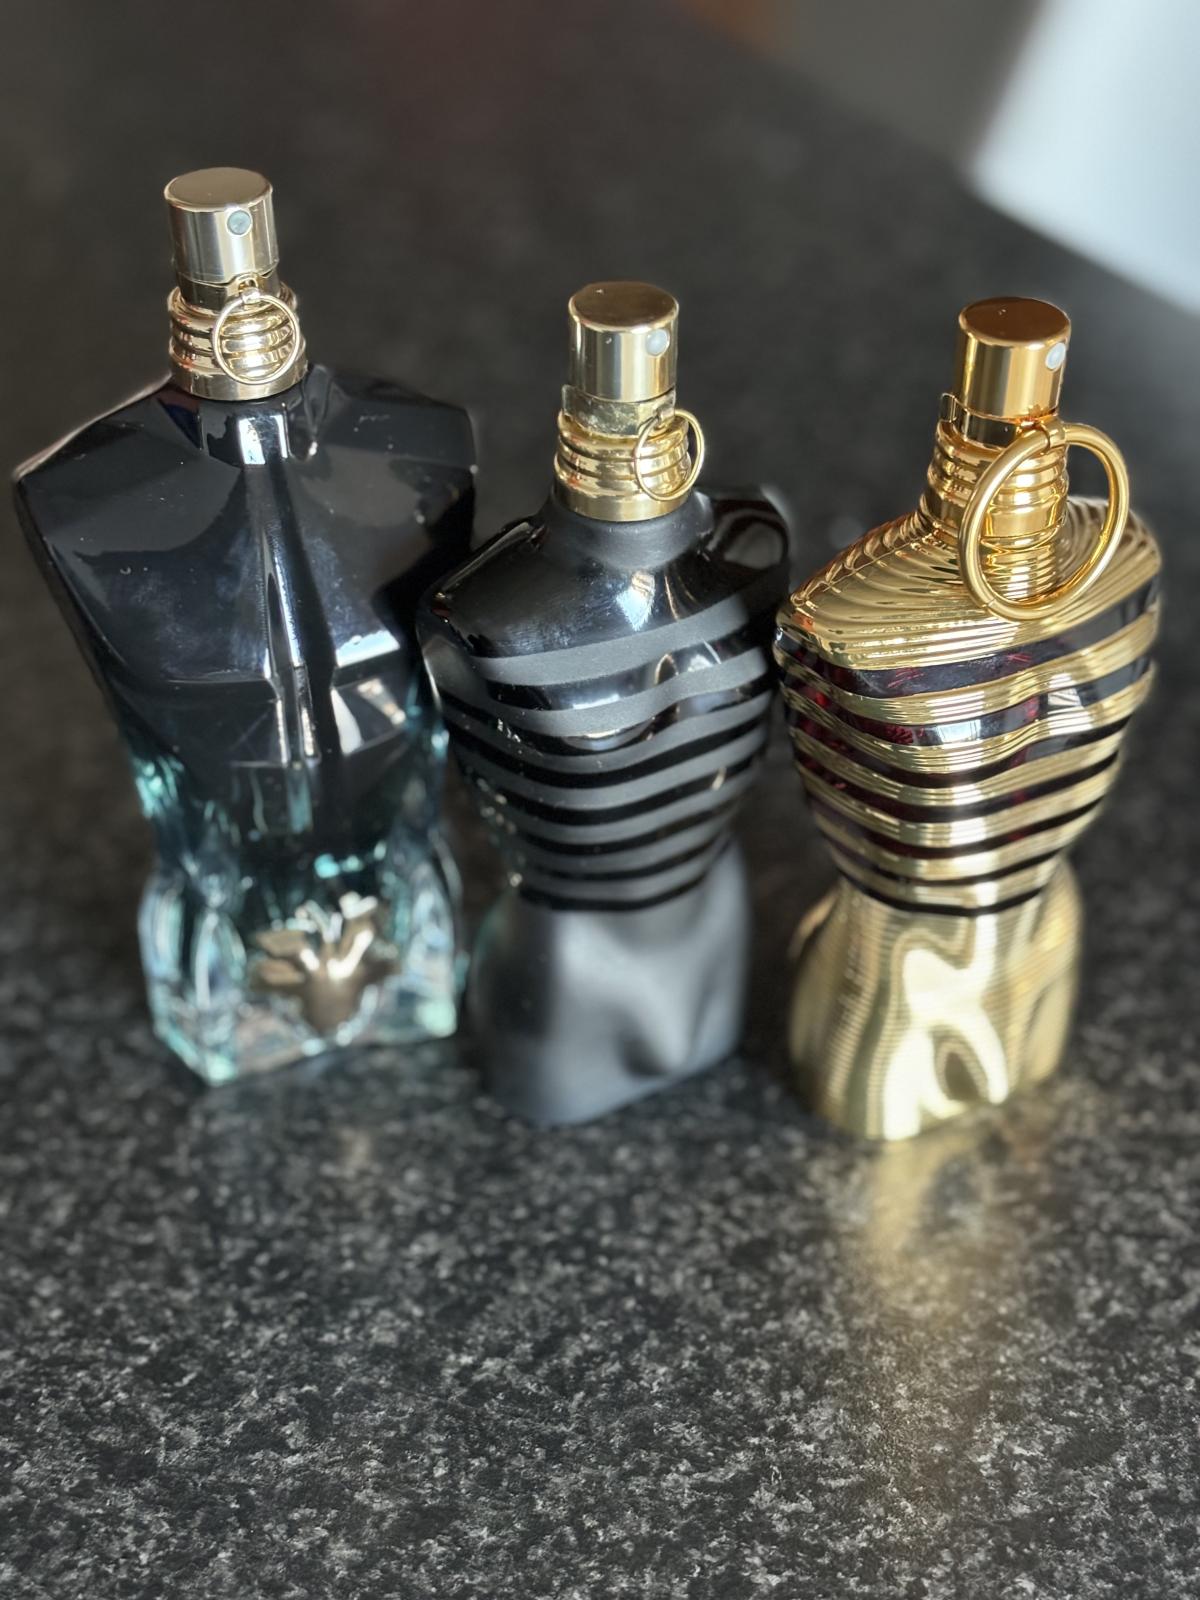 Le Male Elixir Jean Paul Gaultier cologne - a new fragrance for men 2023